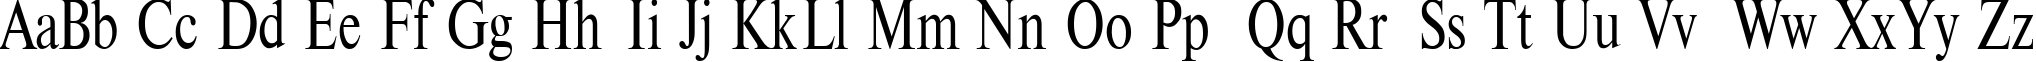 Пример написания английского алфавита шрифтом TimesET75n